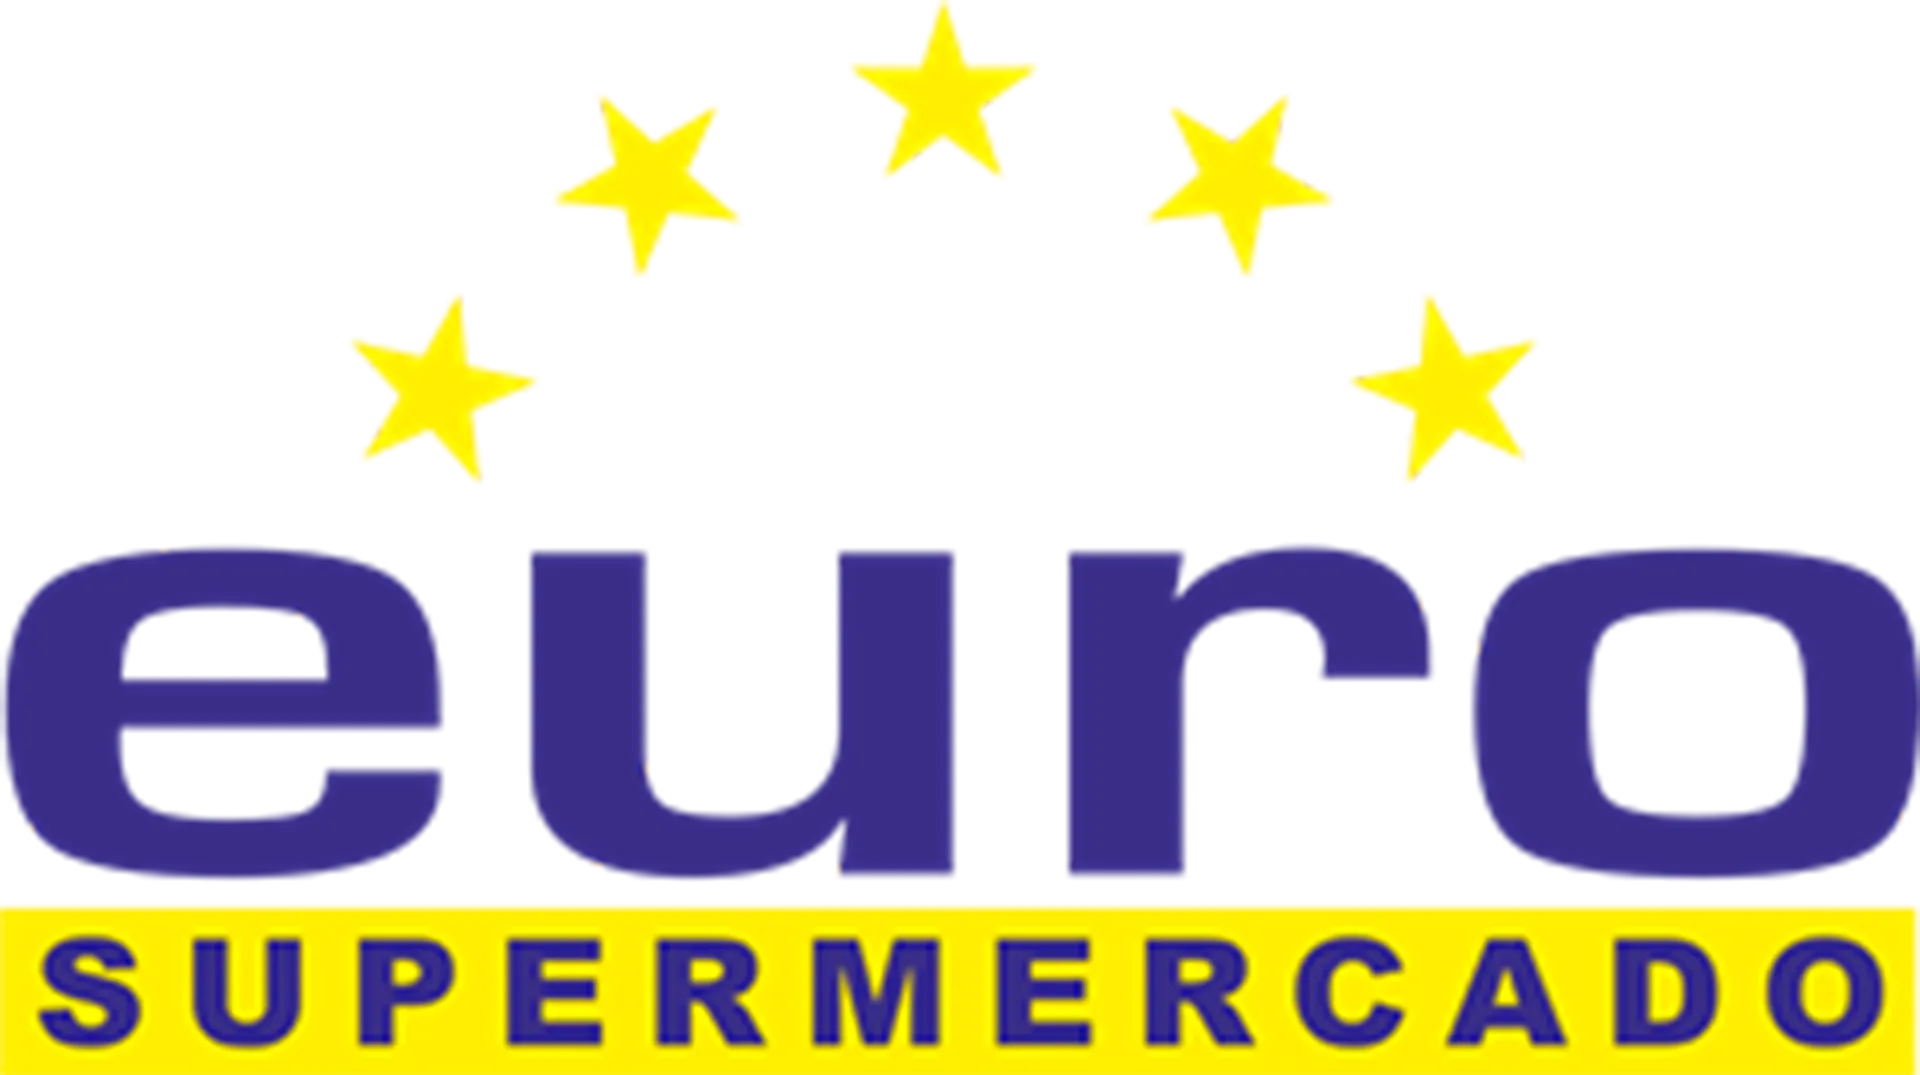  EURO SUPERMERCADOS logo de catálogo